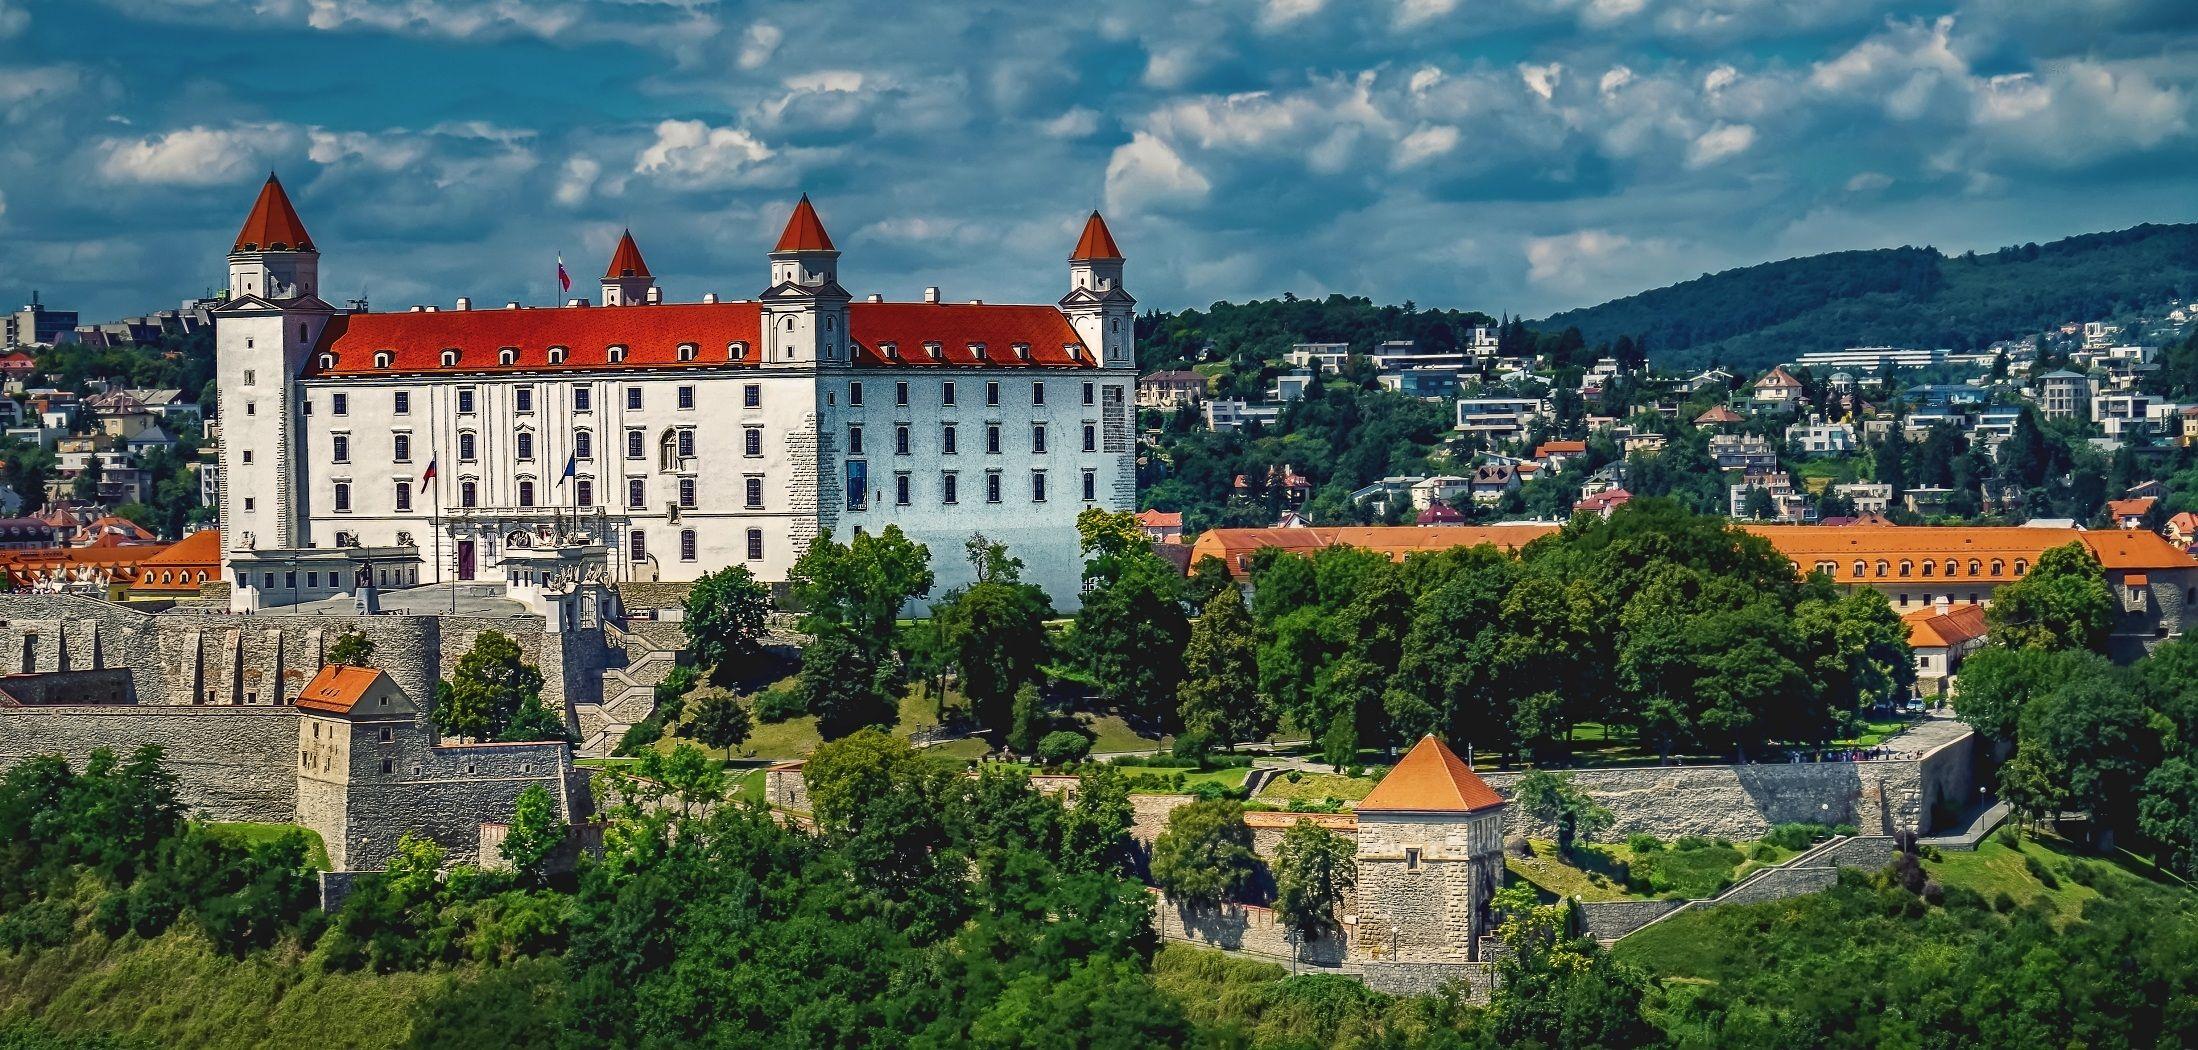 Free of architecture, bratislava, bratislava castle